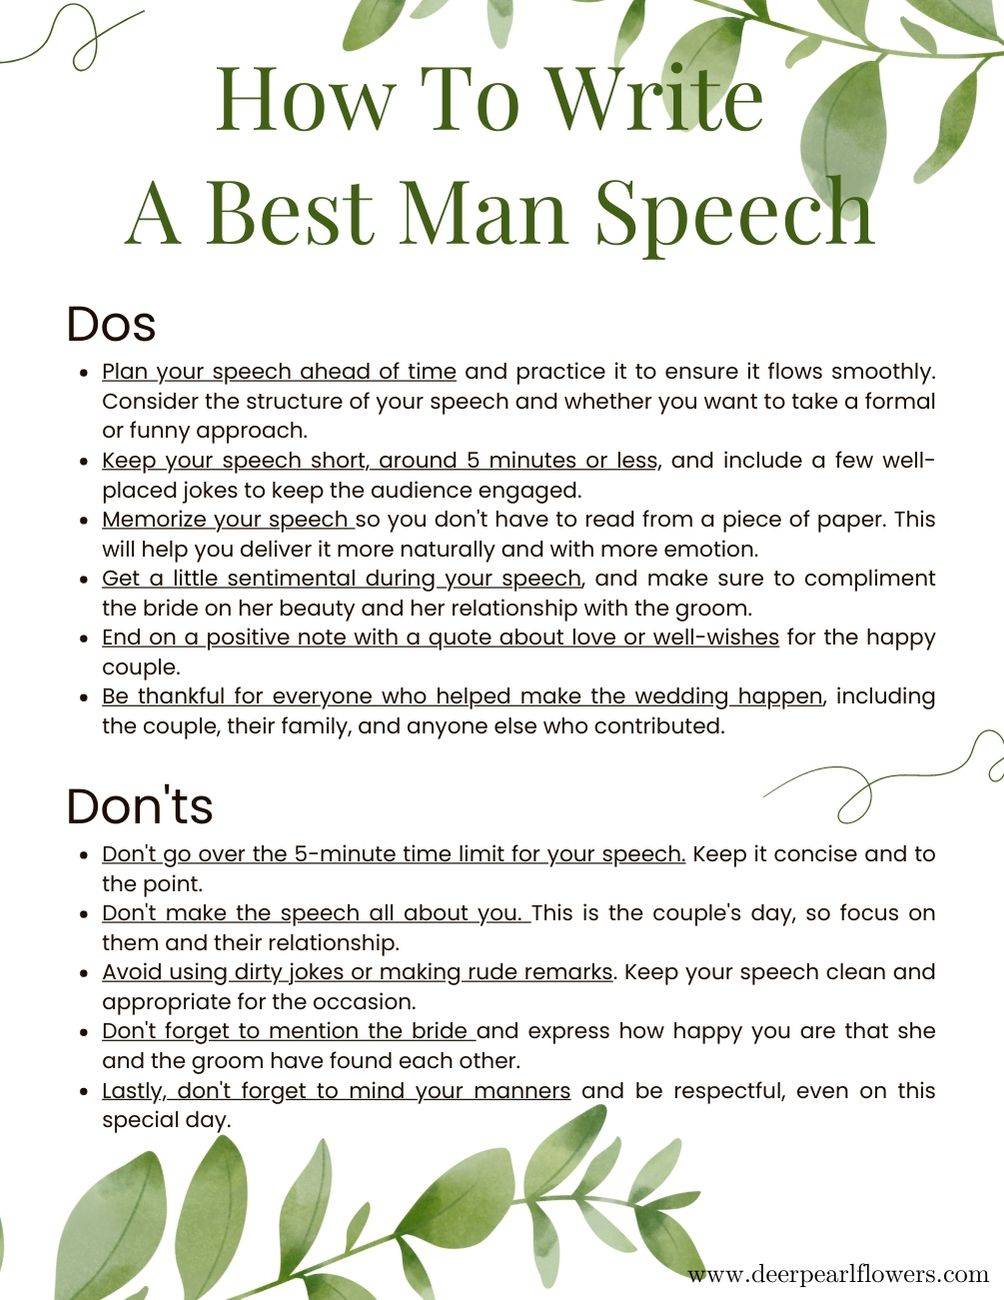 how to write the best man speech